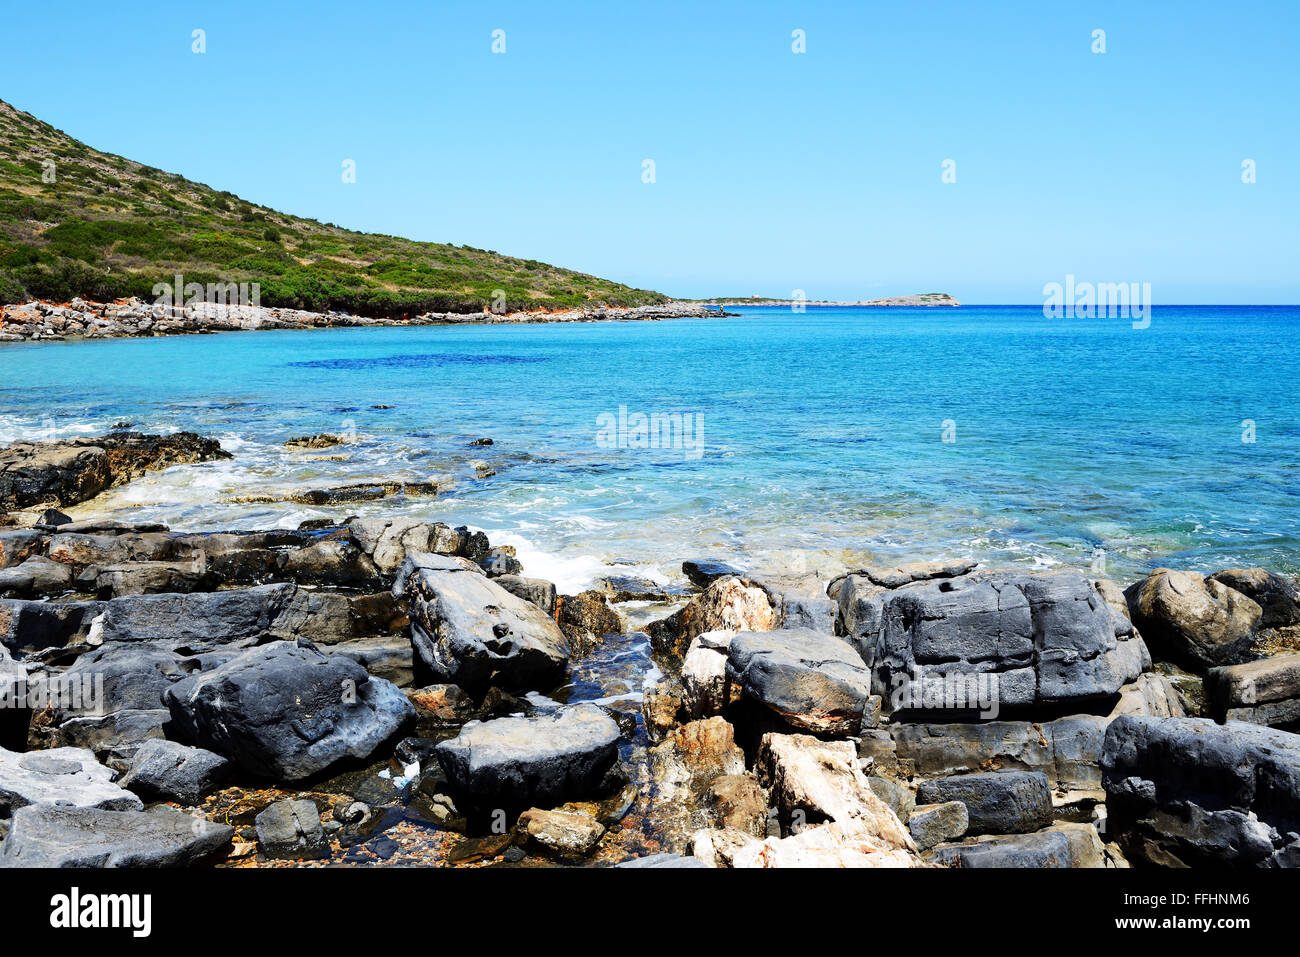 The beach on uninhabited island, Crete, Greece Stock Photo